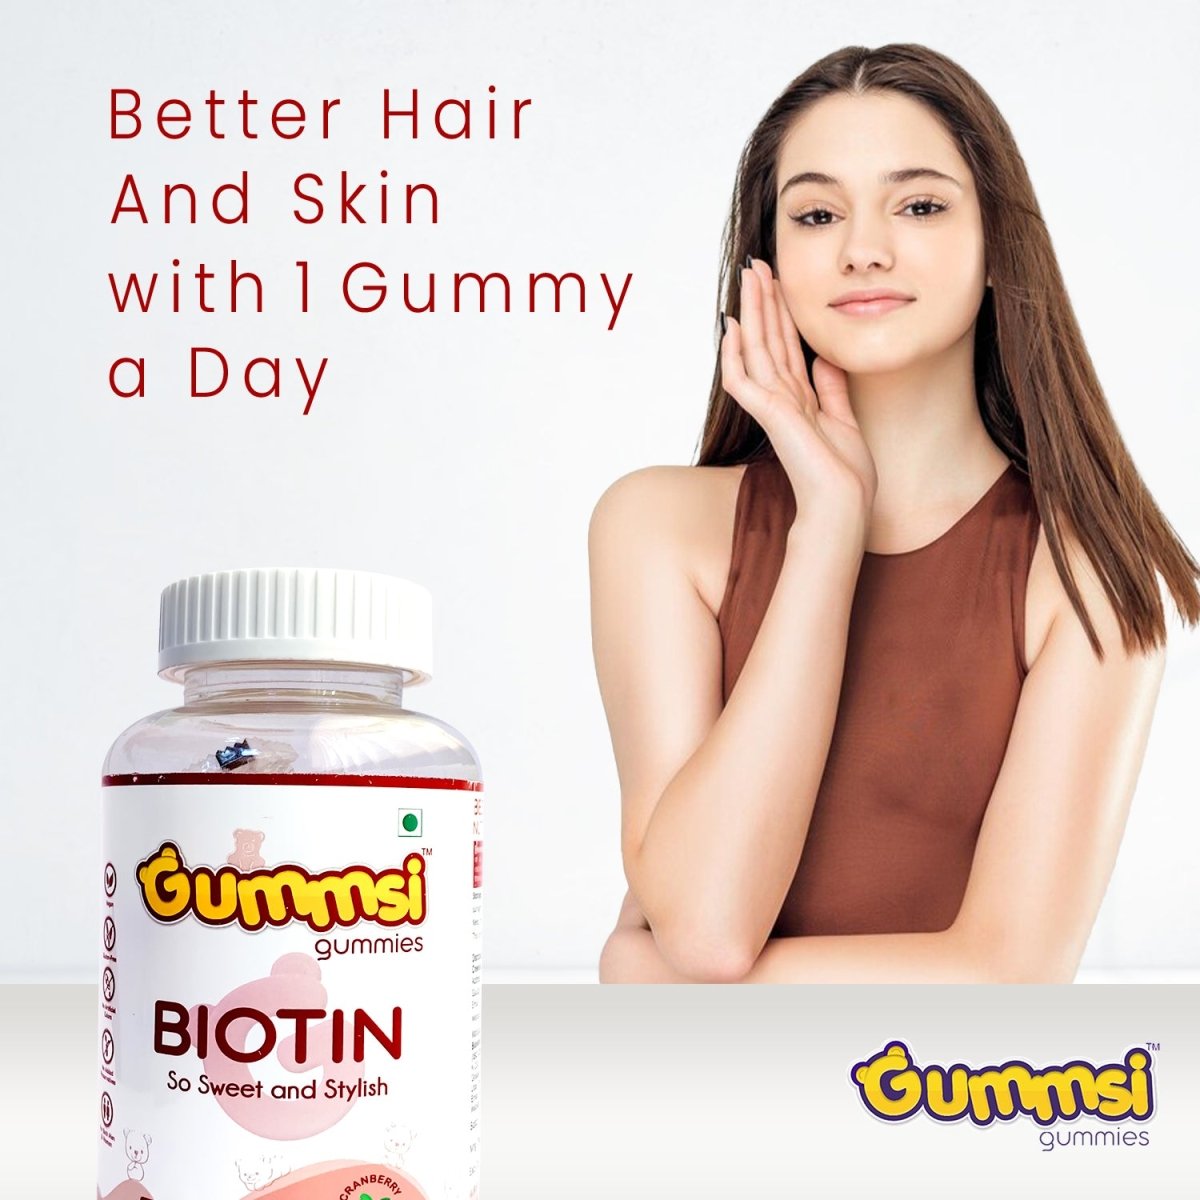 Biotin Gummies - Reduce Hairfall & Hair Thinning | Promotes New Hair Growth | Vitamin B7 for Hair and Nail Health